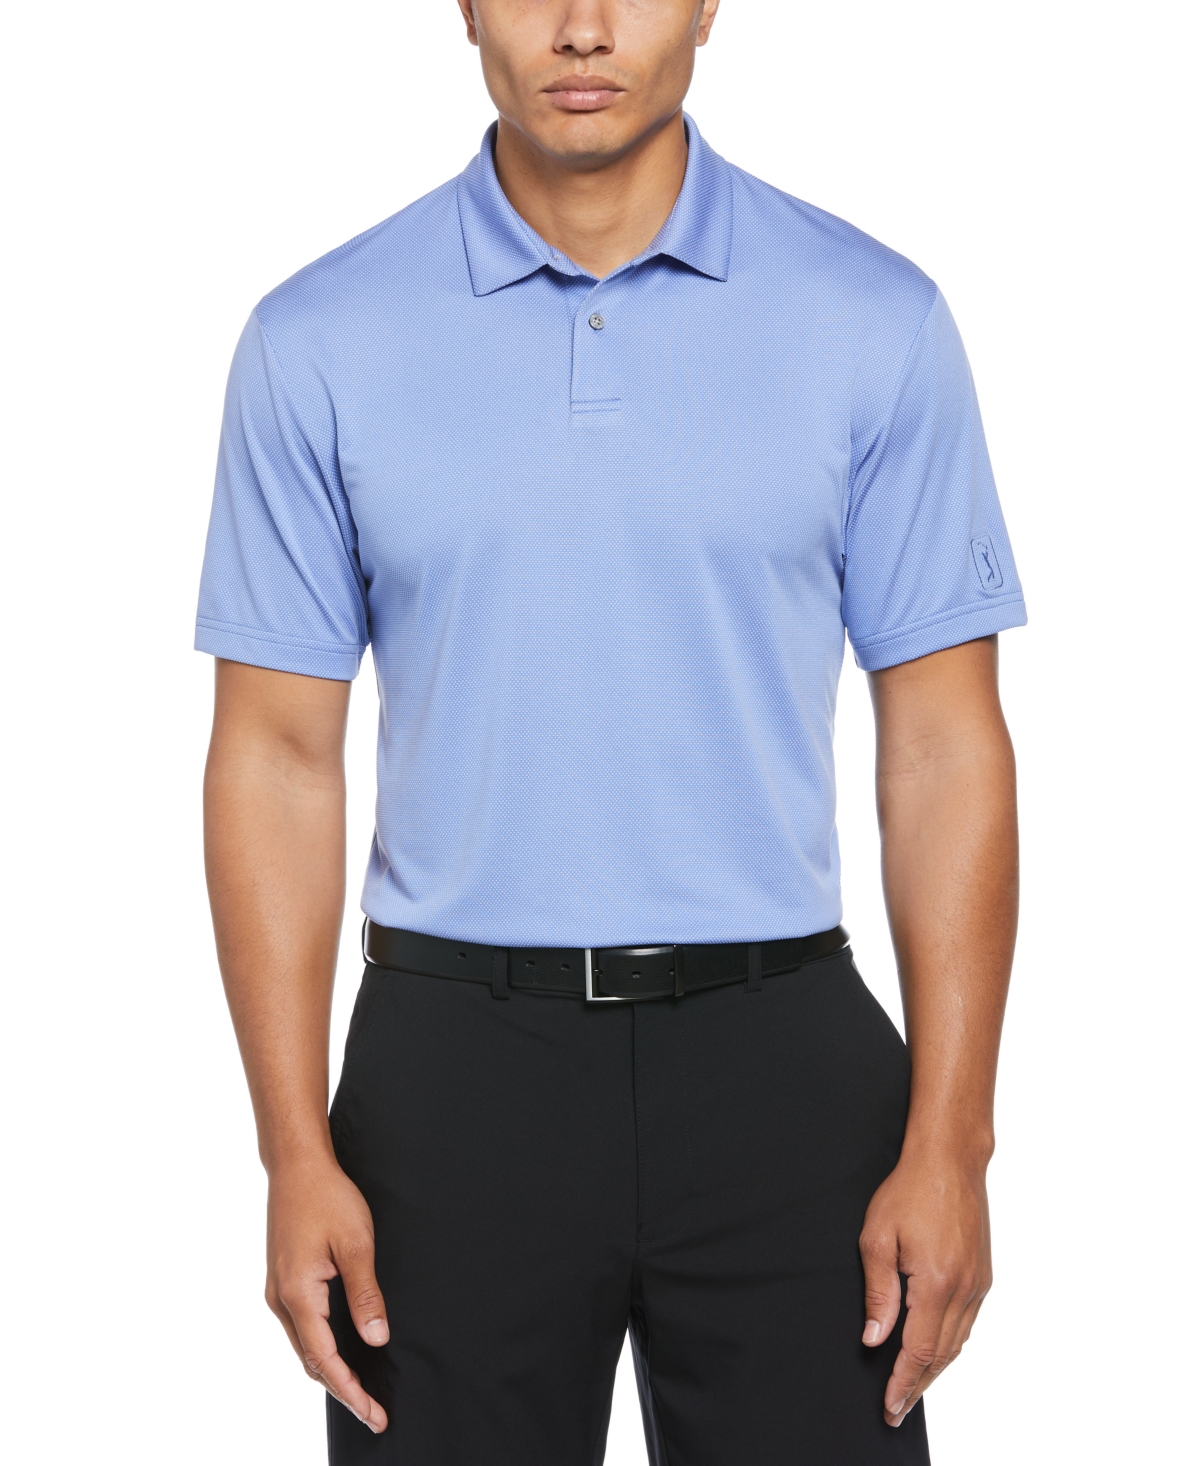 Men's Birdseye Textured Short-Sleeve Performance Polo Shirt - Persian Jewel